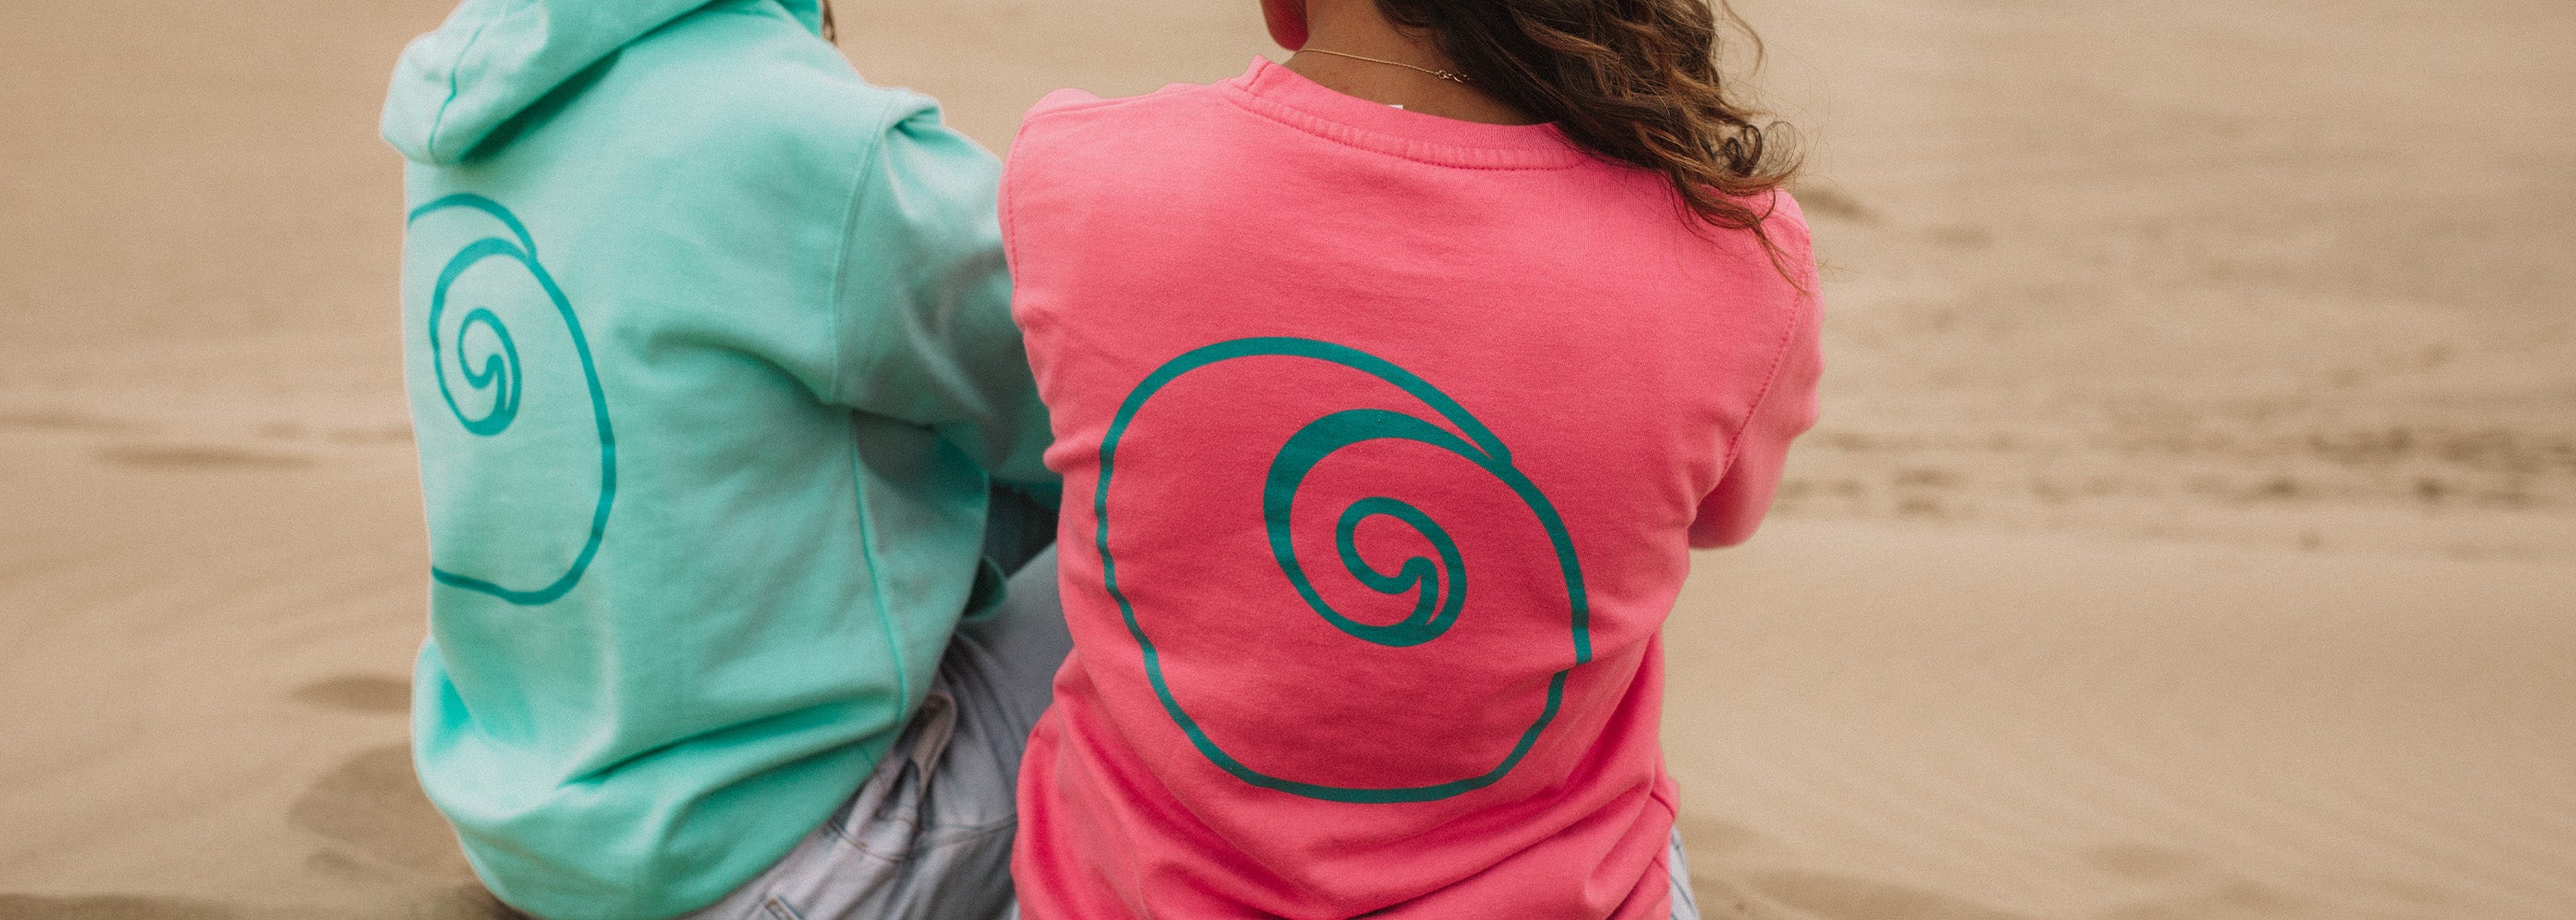 Pink and Mint Nalu Sweatshirts worn by girls on beach.